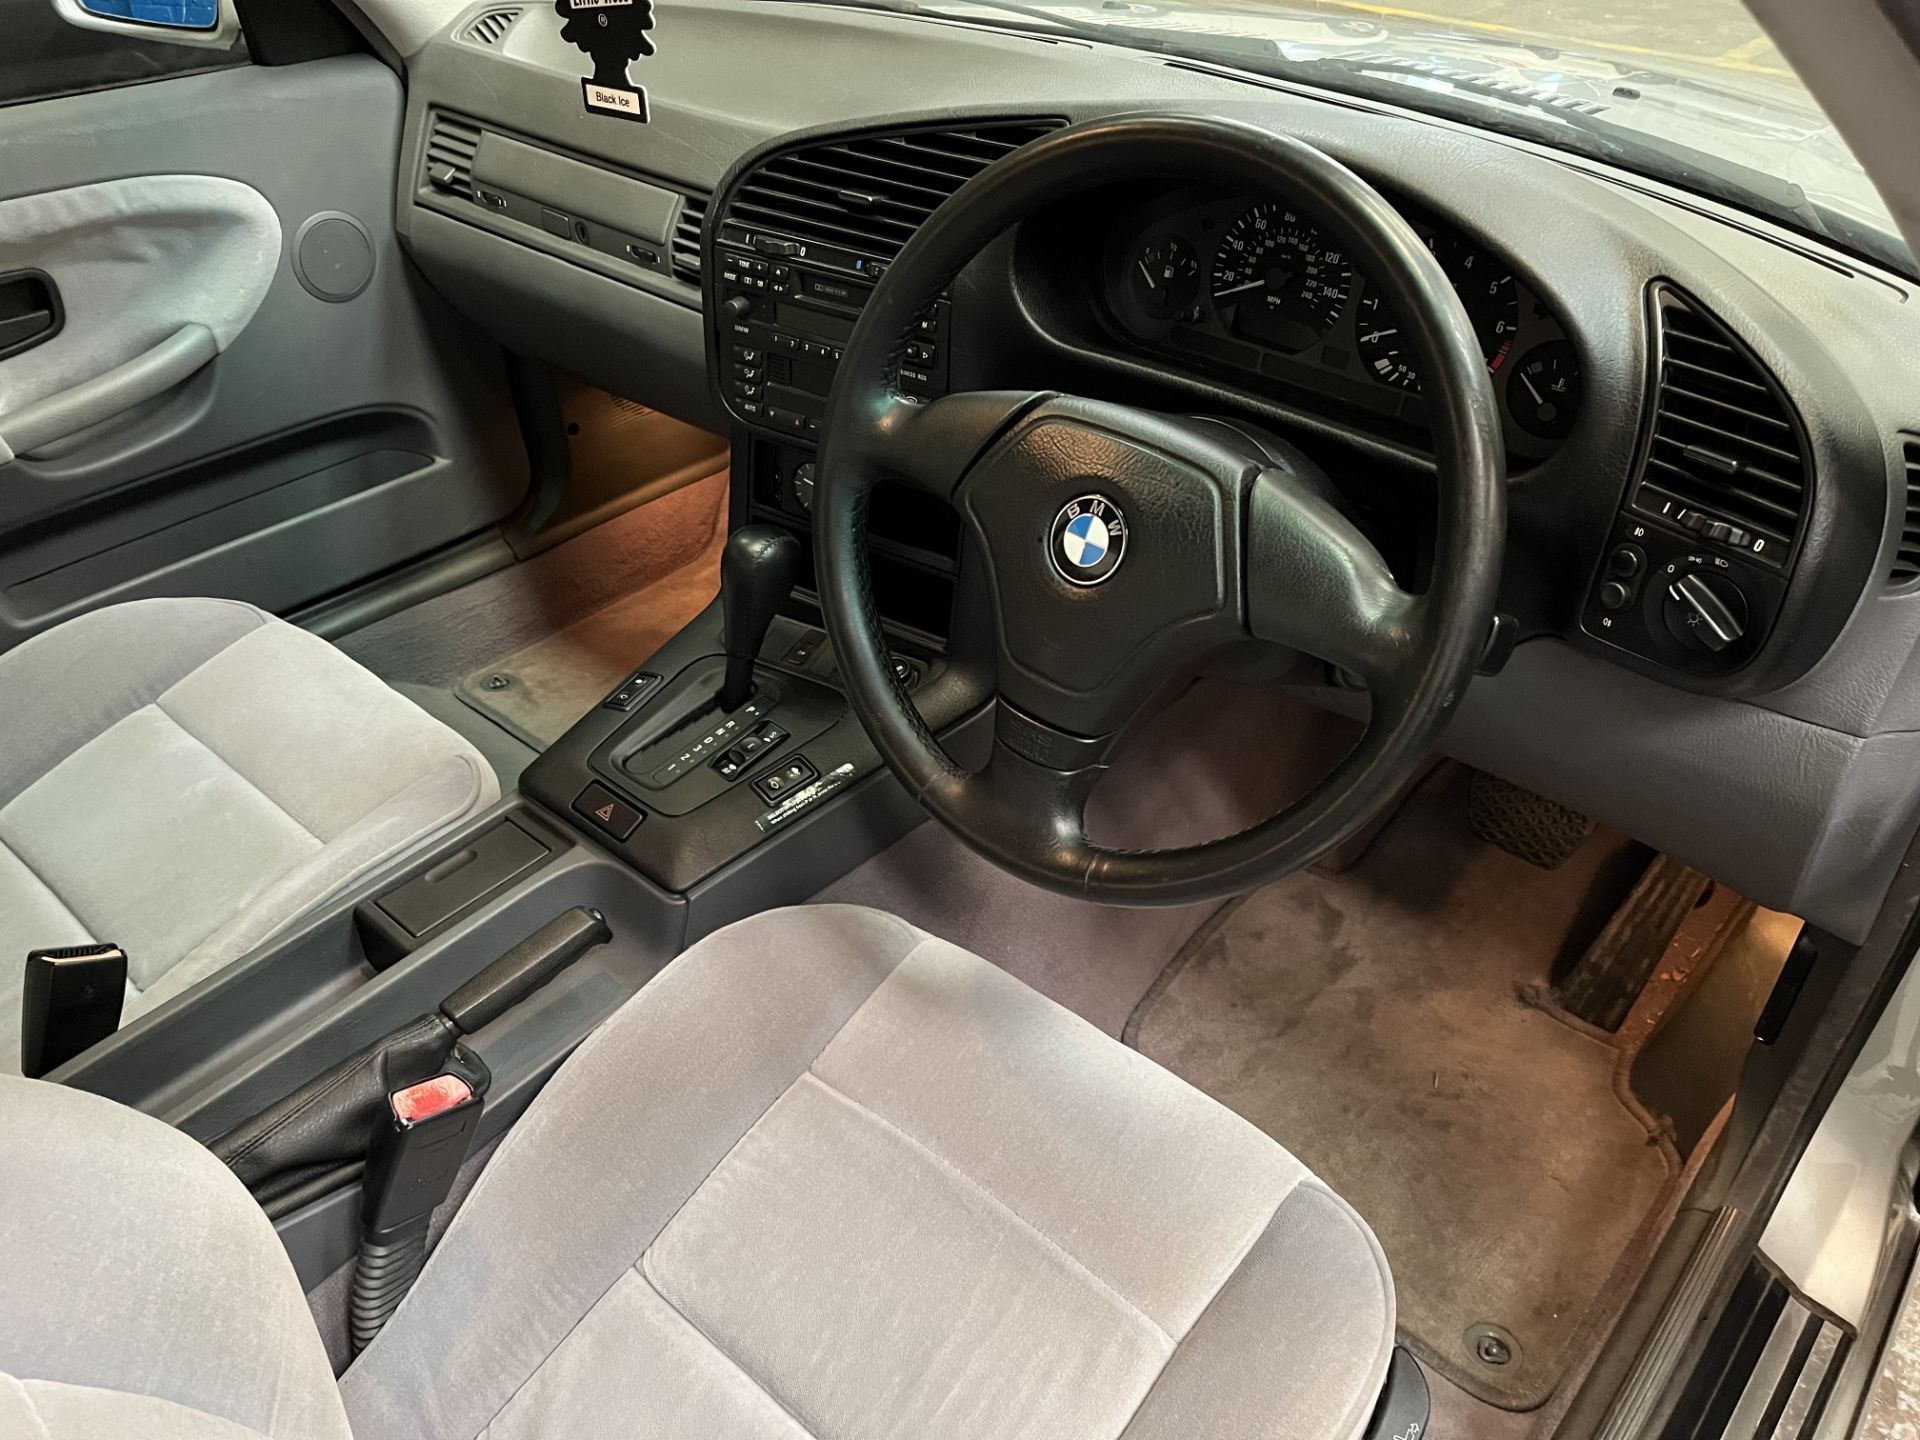 1998 BMW 318is Auto - 1896cc - Image 9 of 19